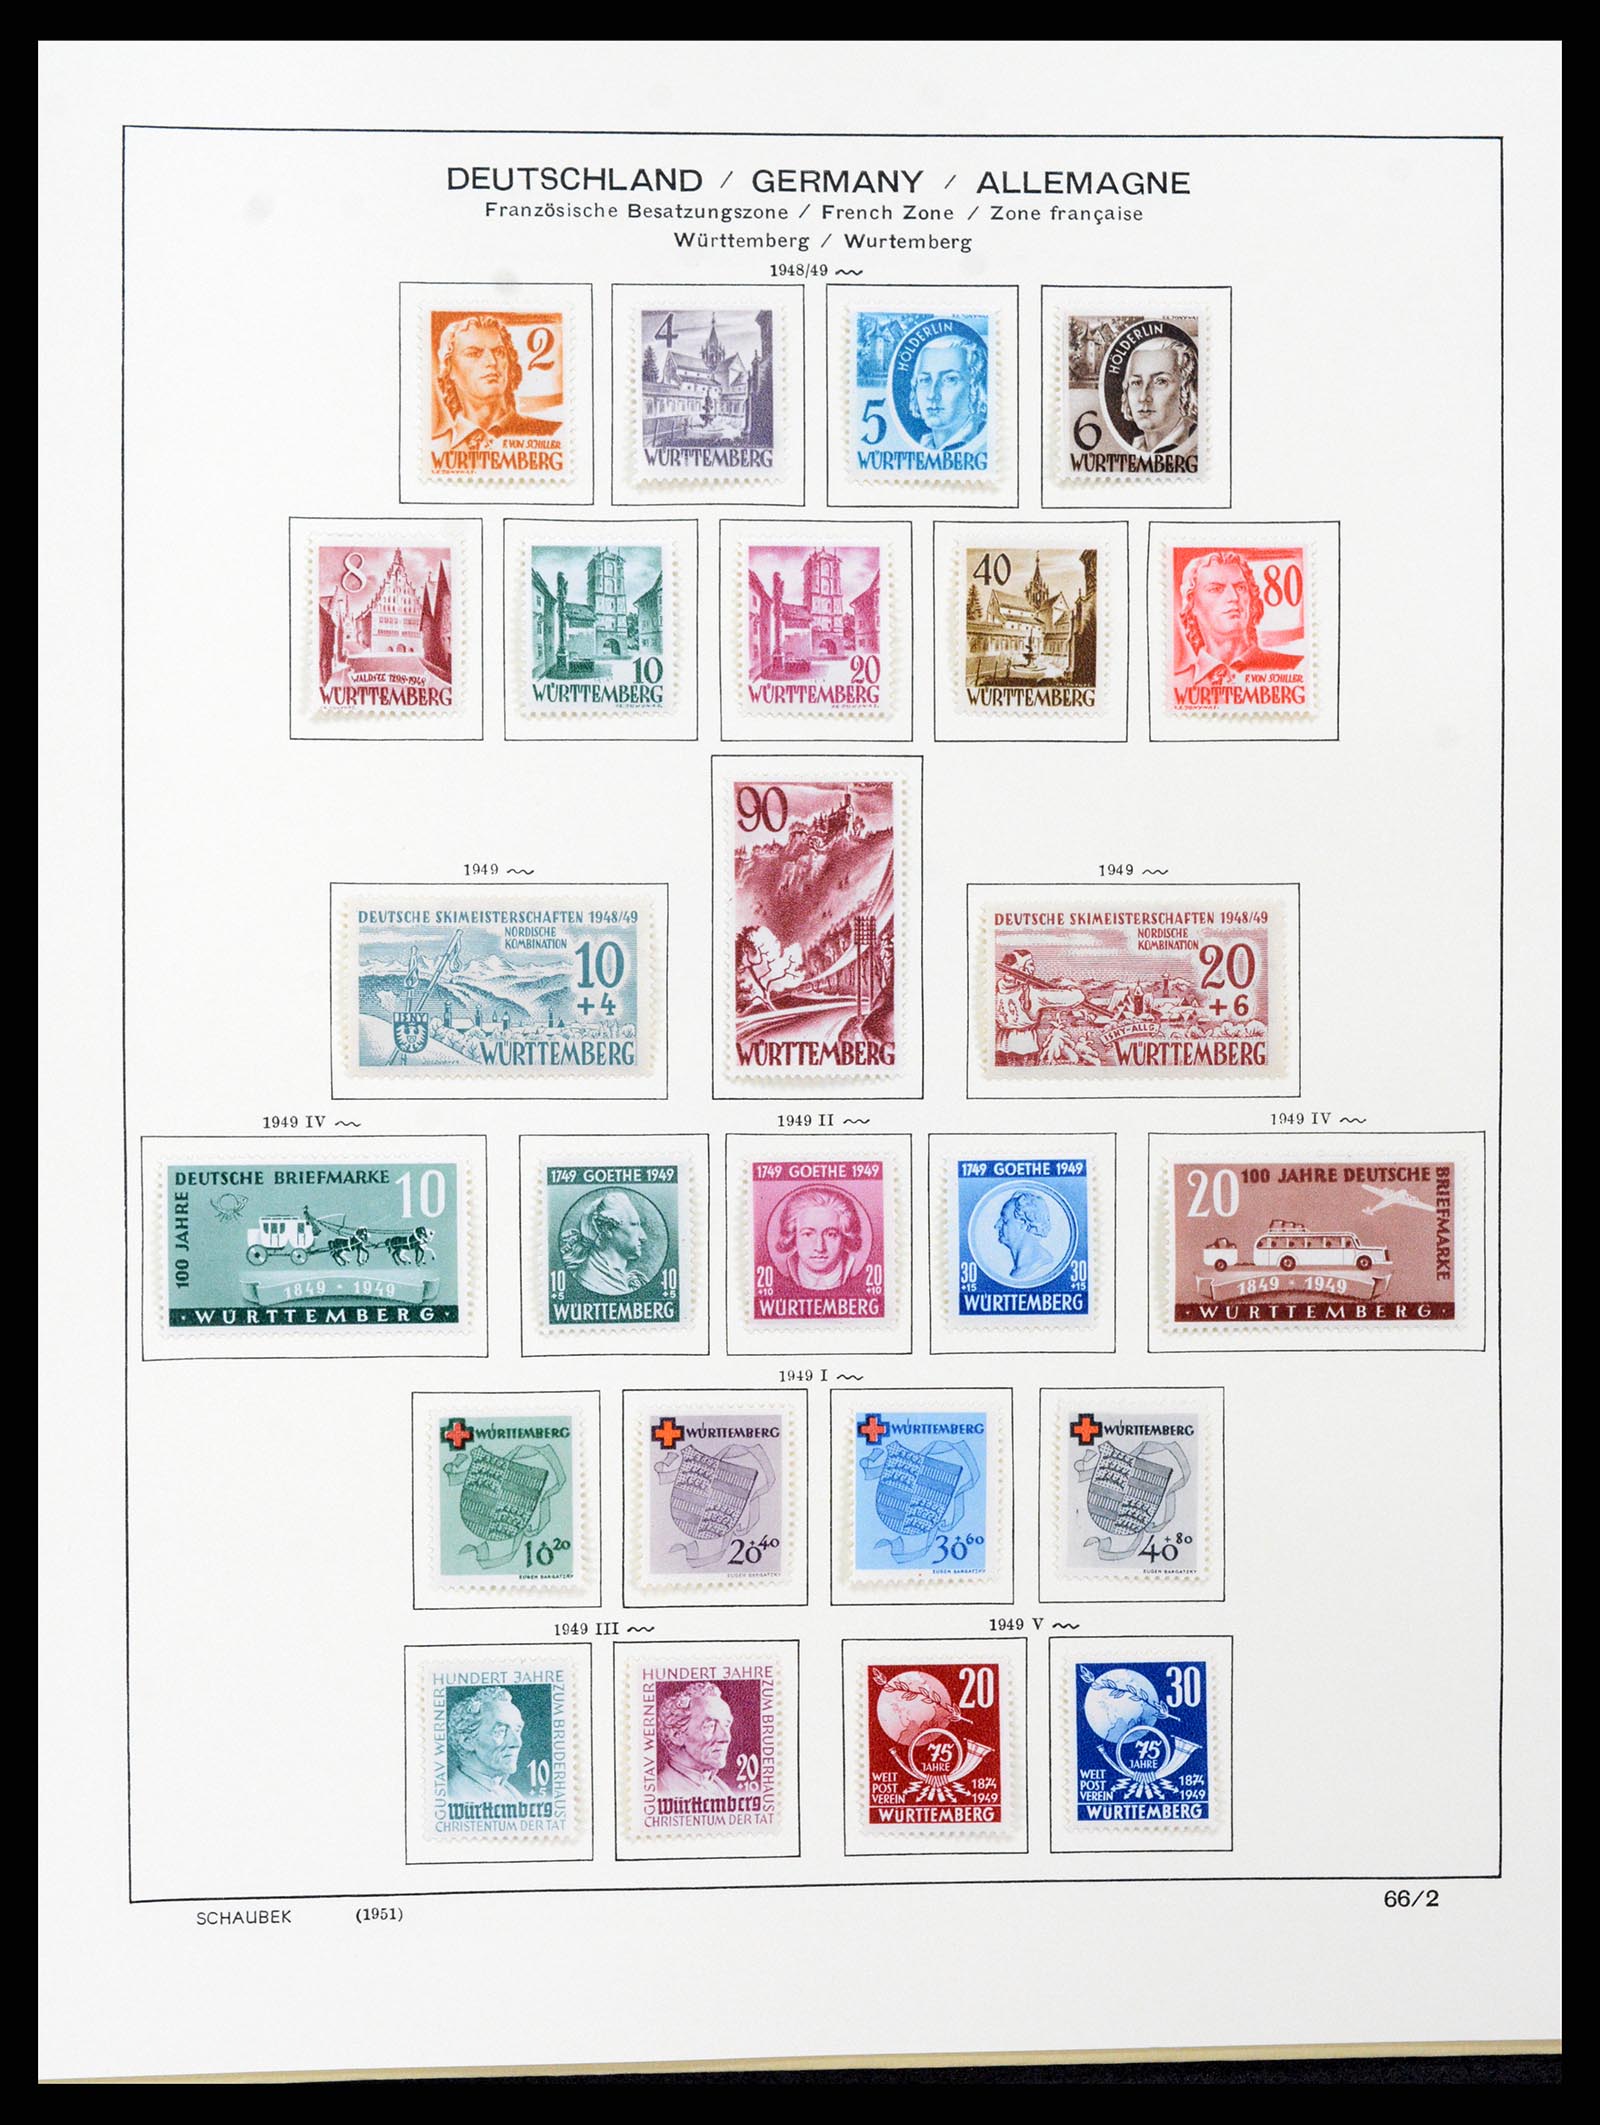 37645 070 - Stamp collection 37645 German Zones 1945-1949.